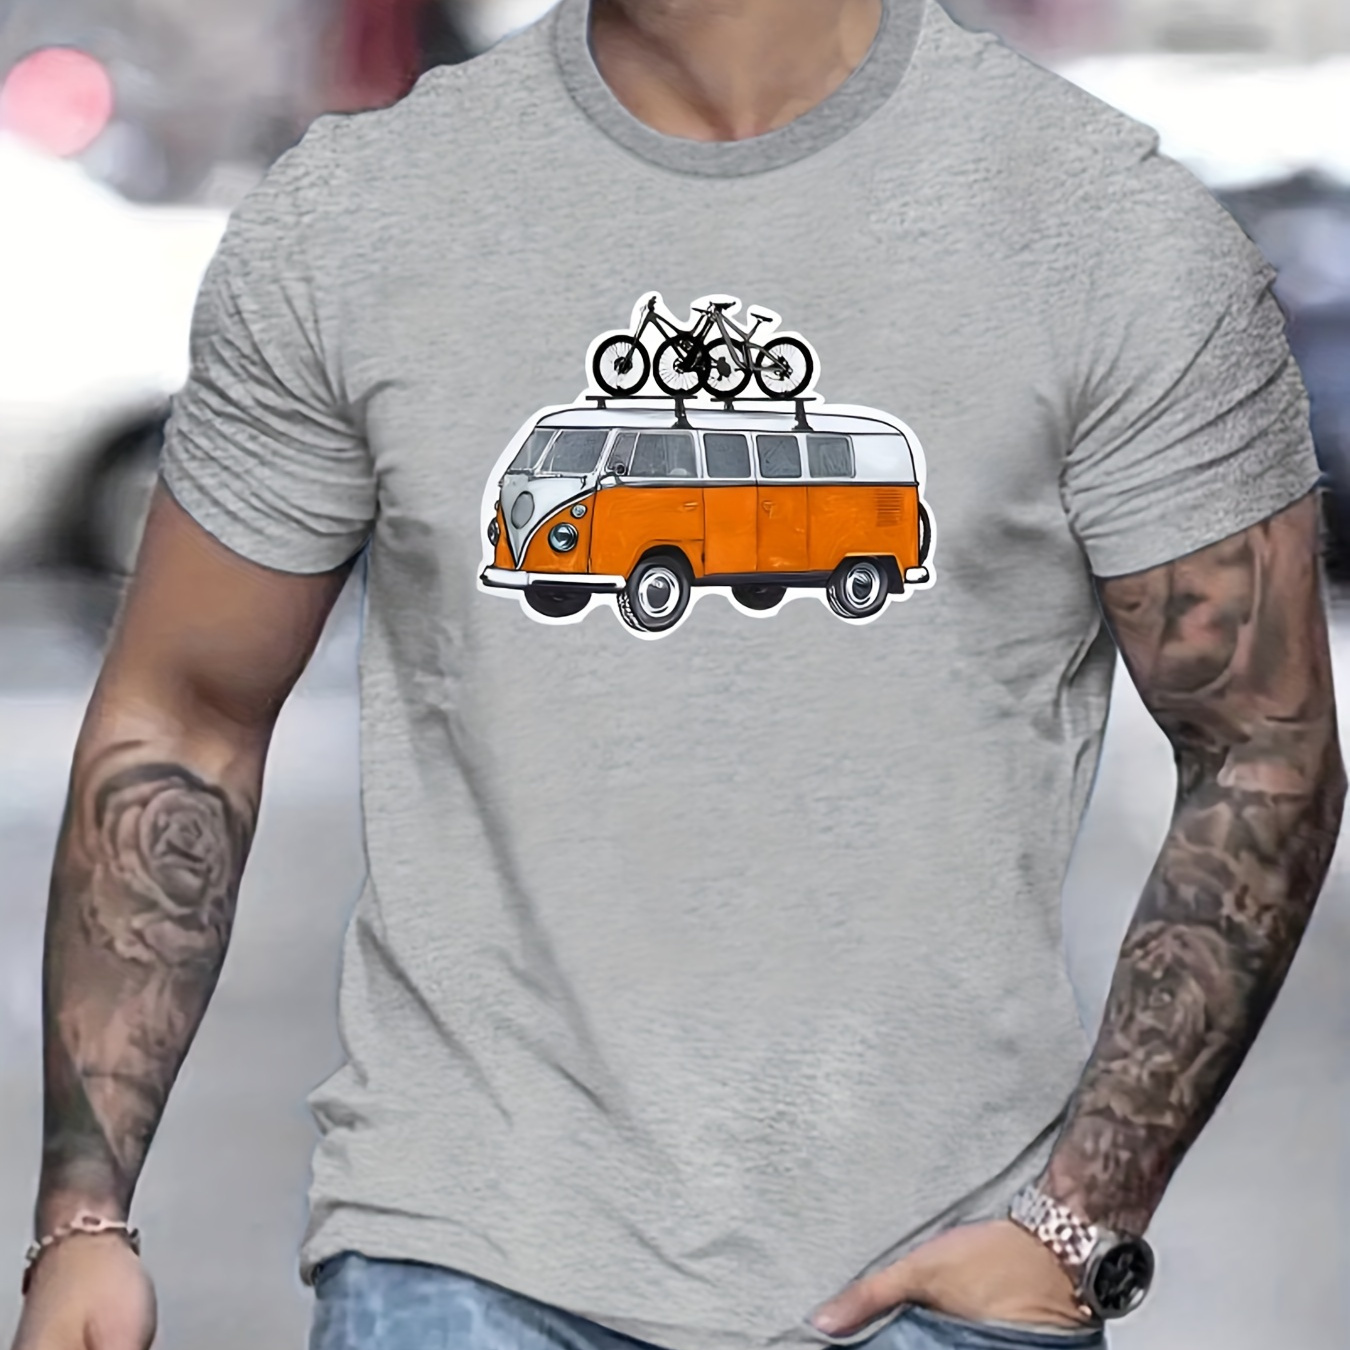 

Bikes On A Van Print T Shirt, Tees For Men, Casual Short Sleeve T-shirt For Summer